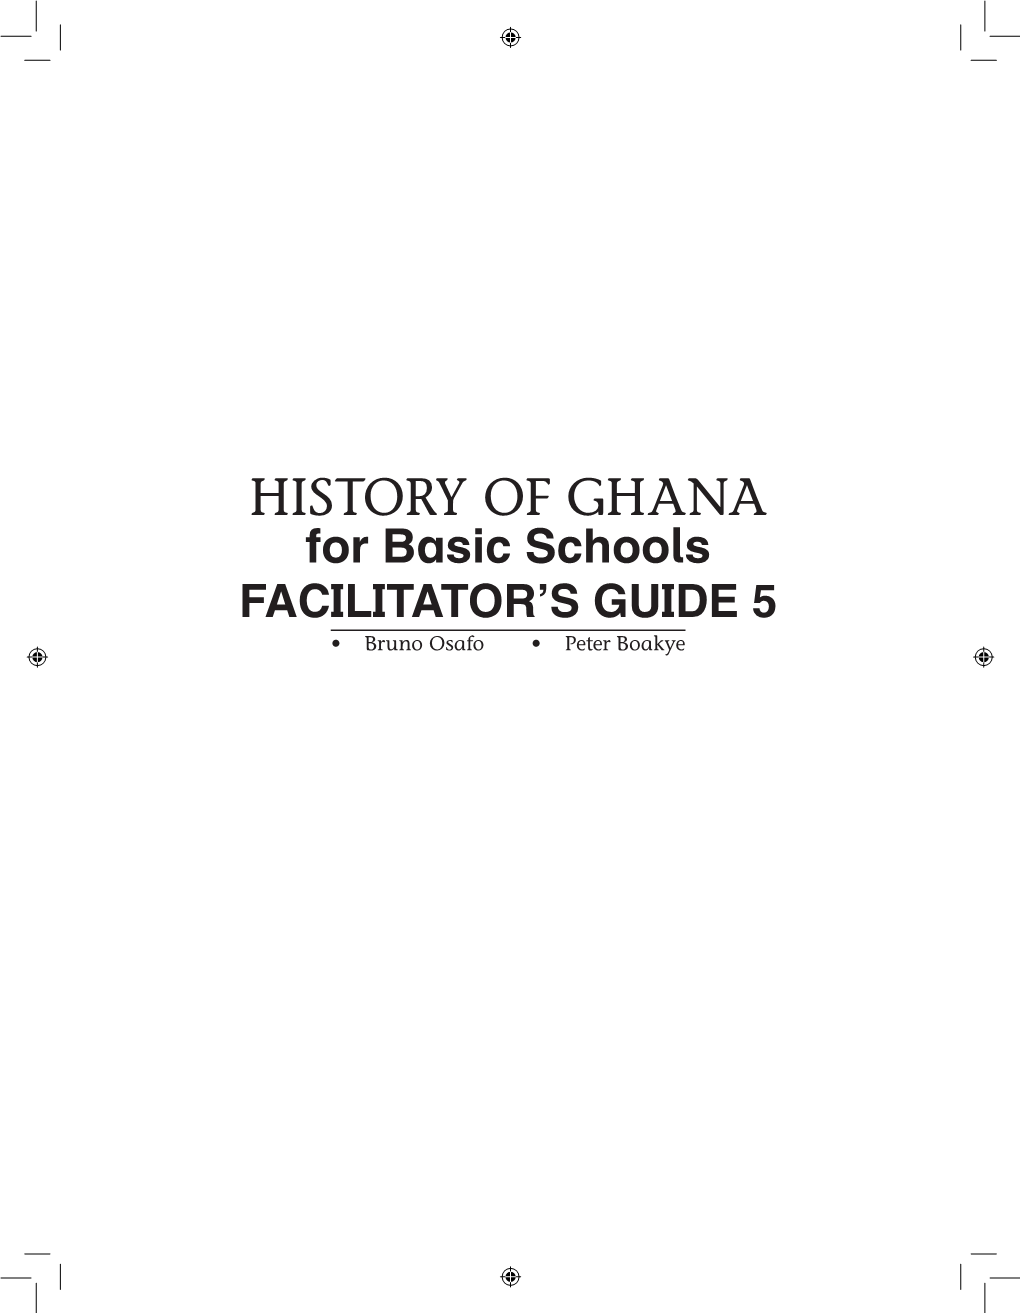 Primary 5 History of Ghana Facilitator's Guide